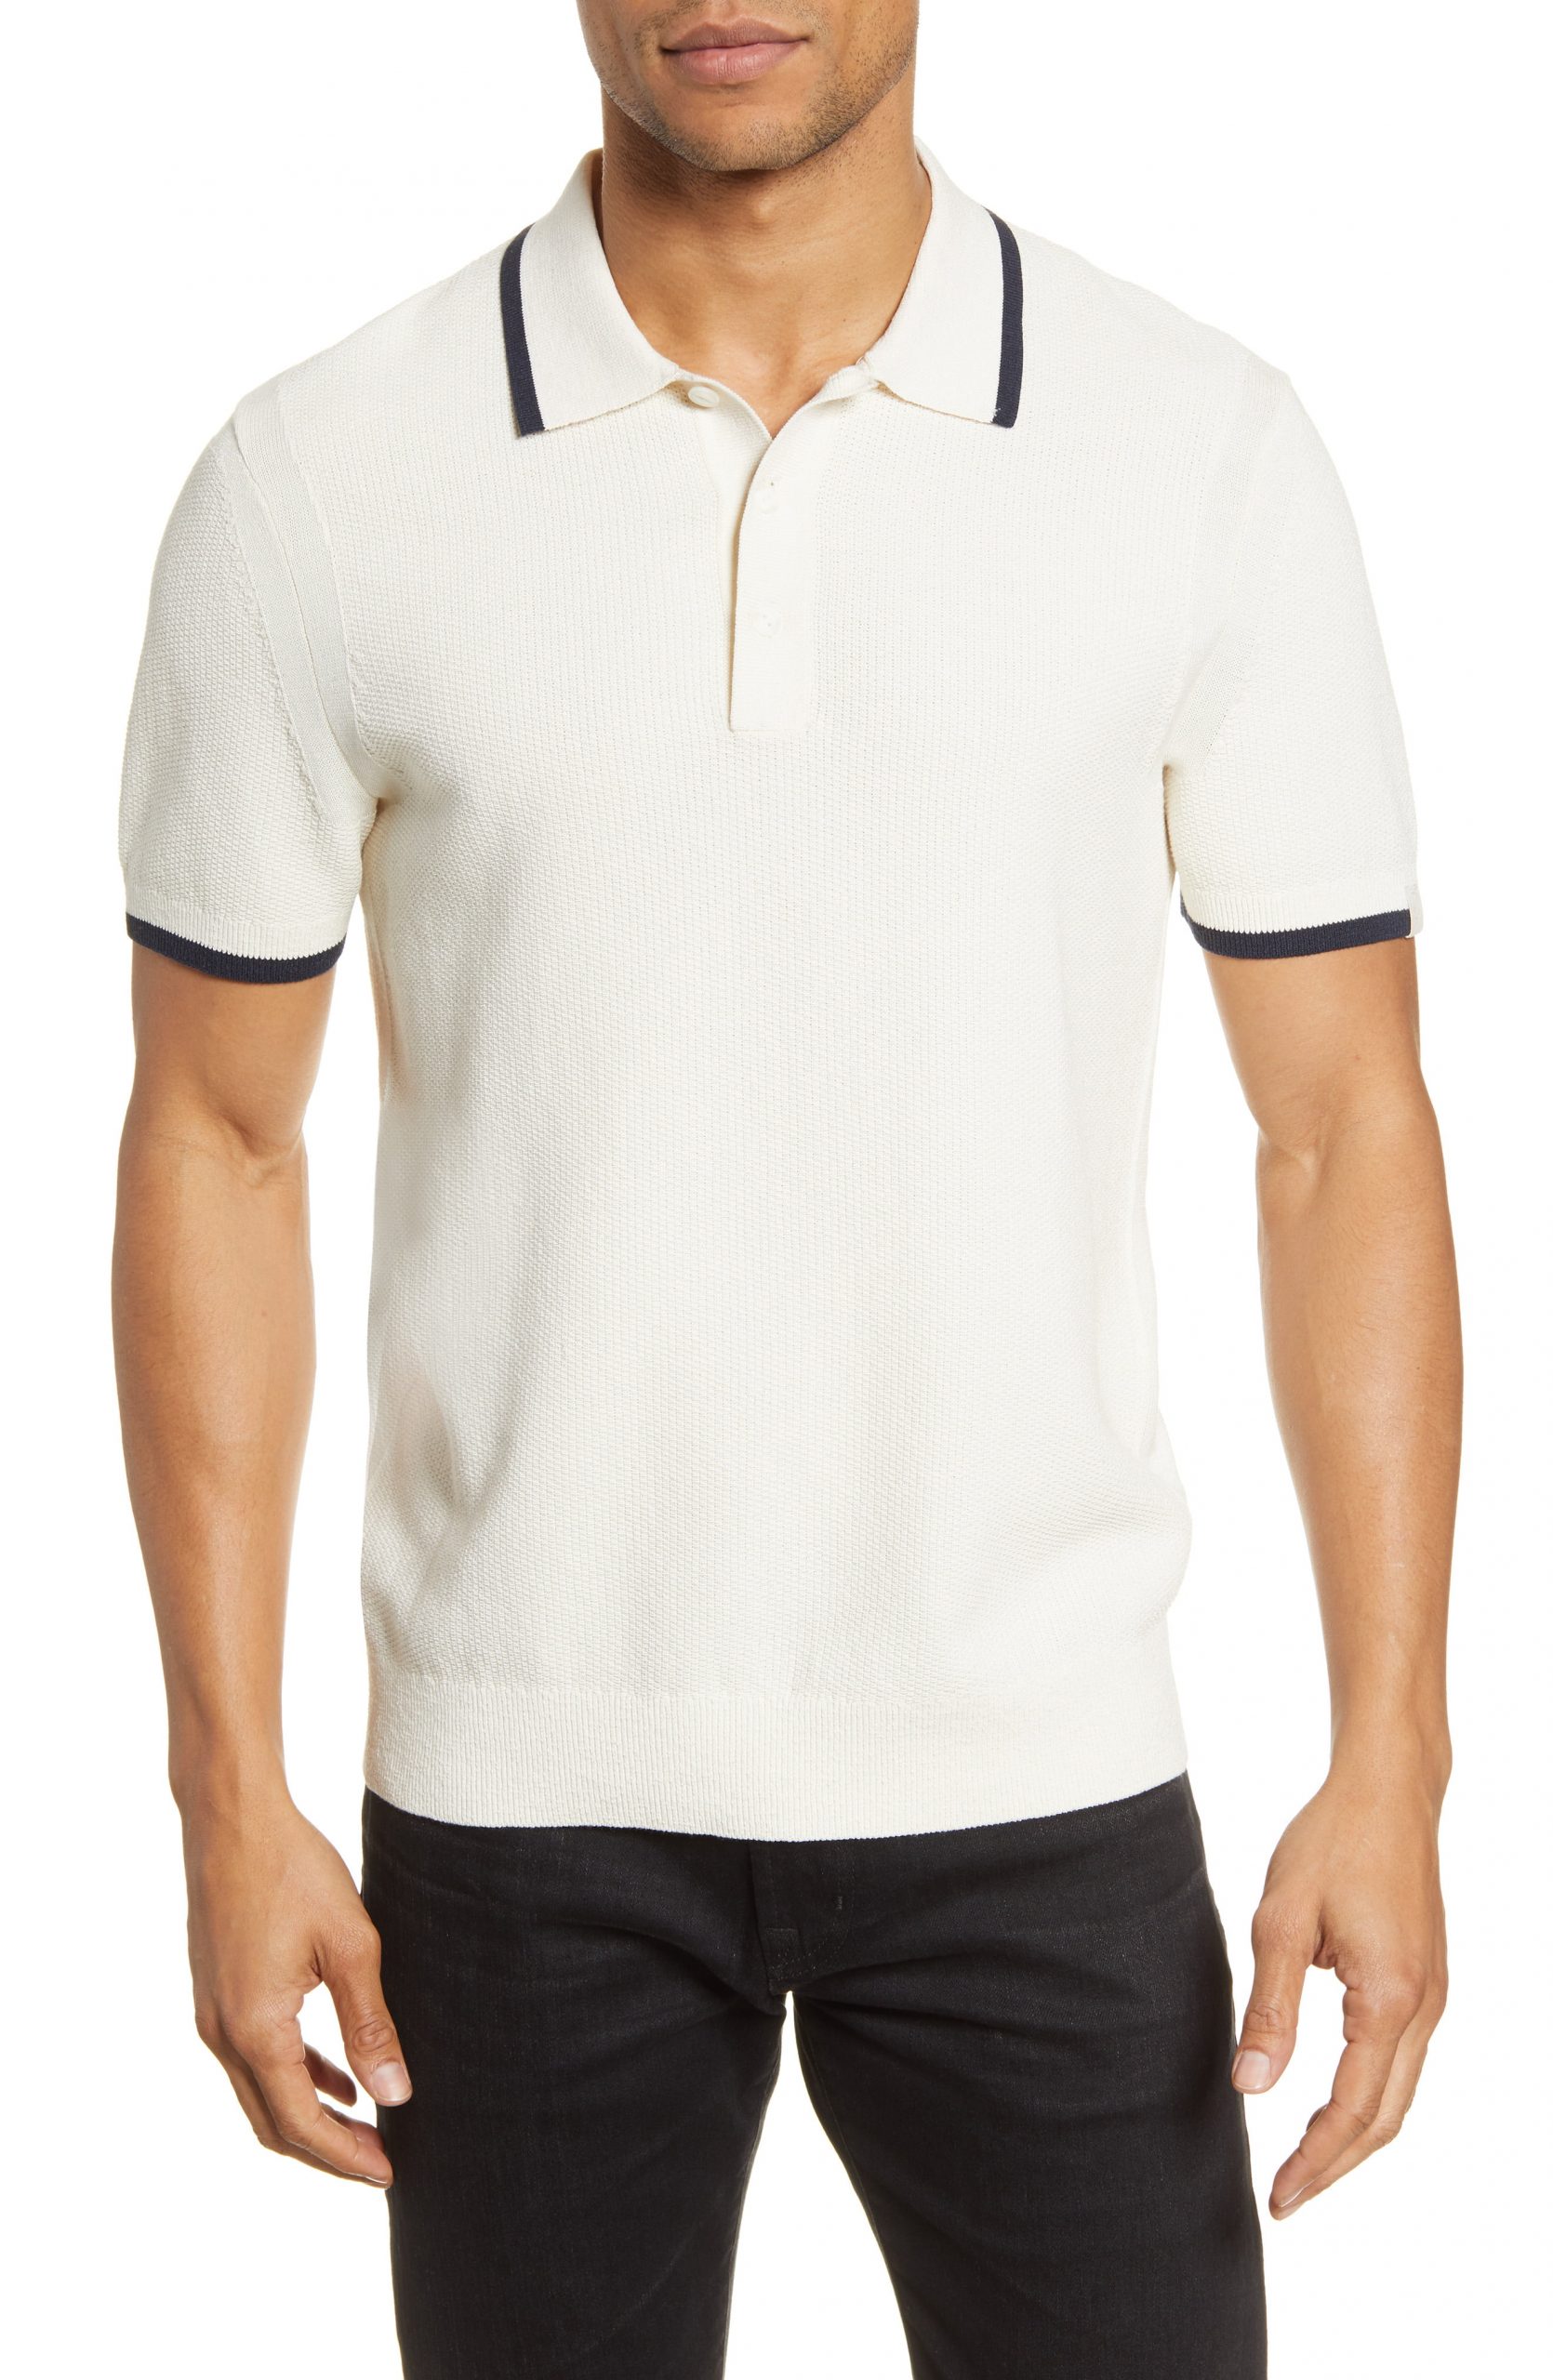 Polo Shirt Mens Zipper Collar White Chocolate Brown Striped Fashion Short Sleeve